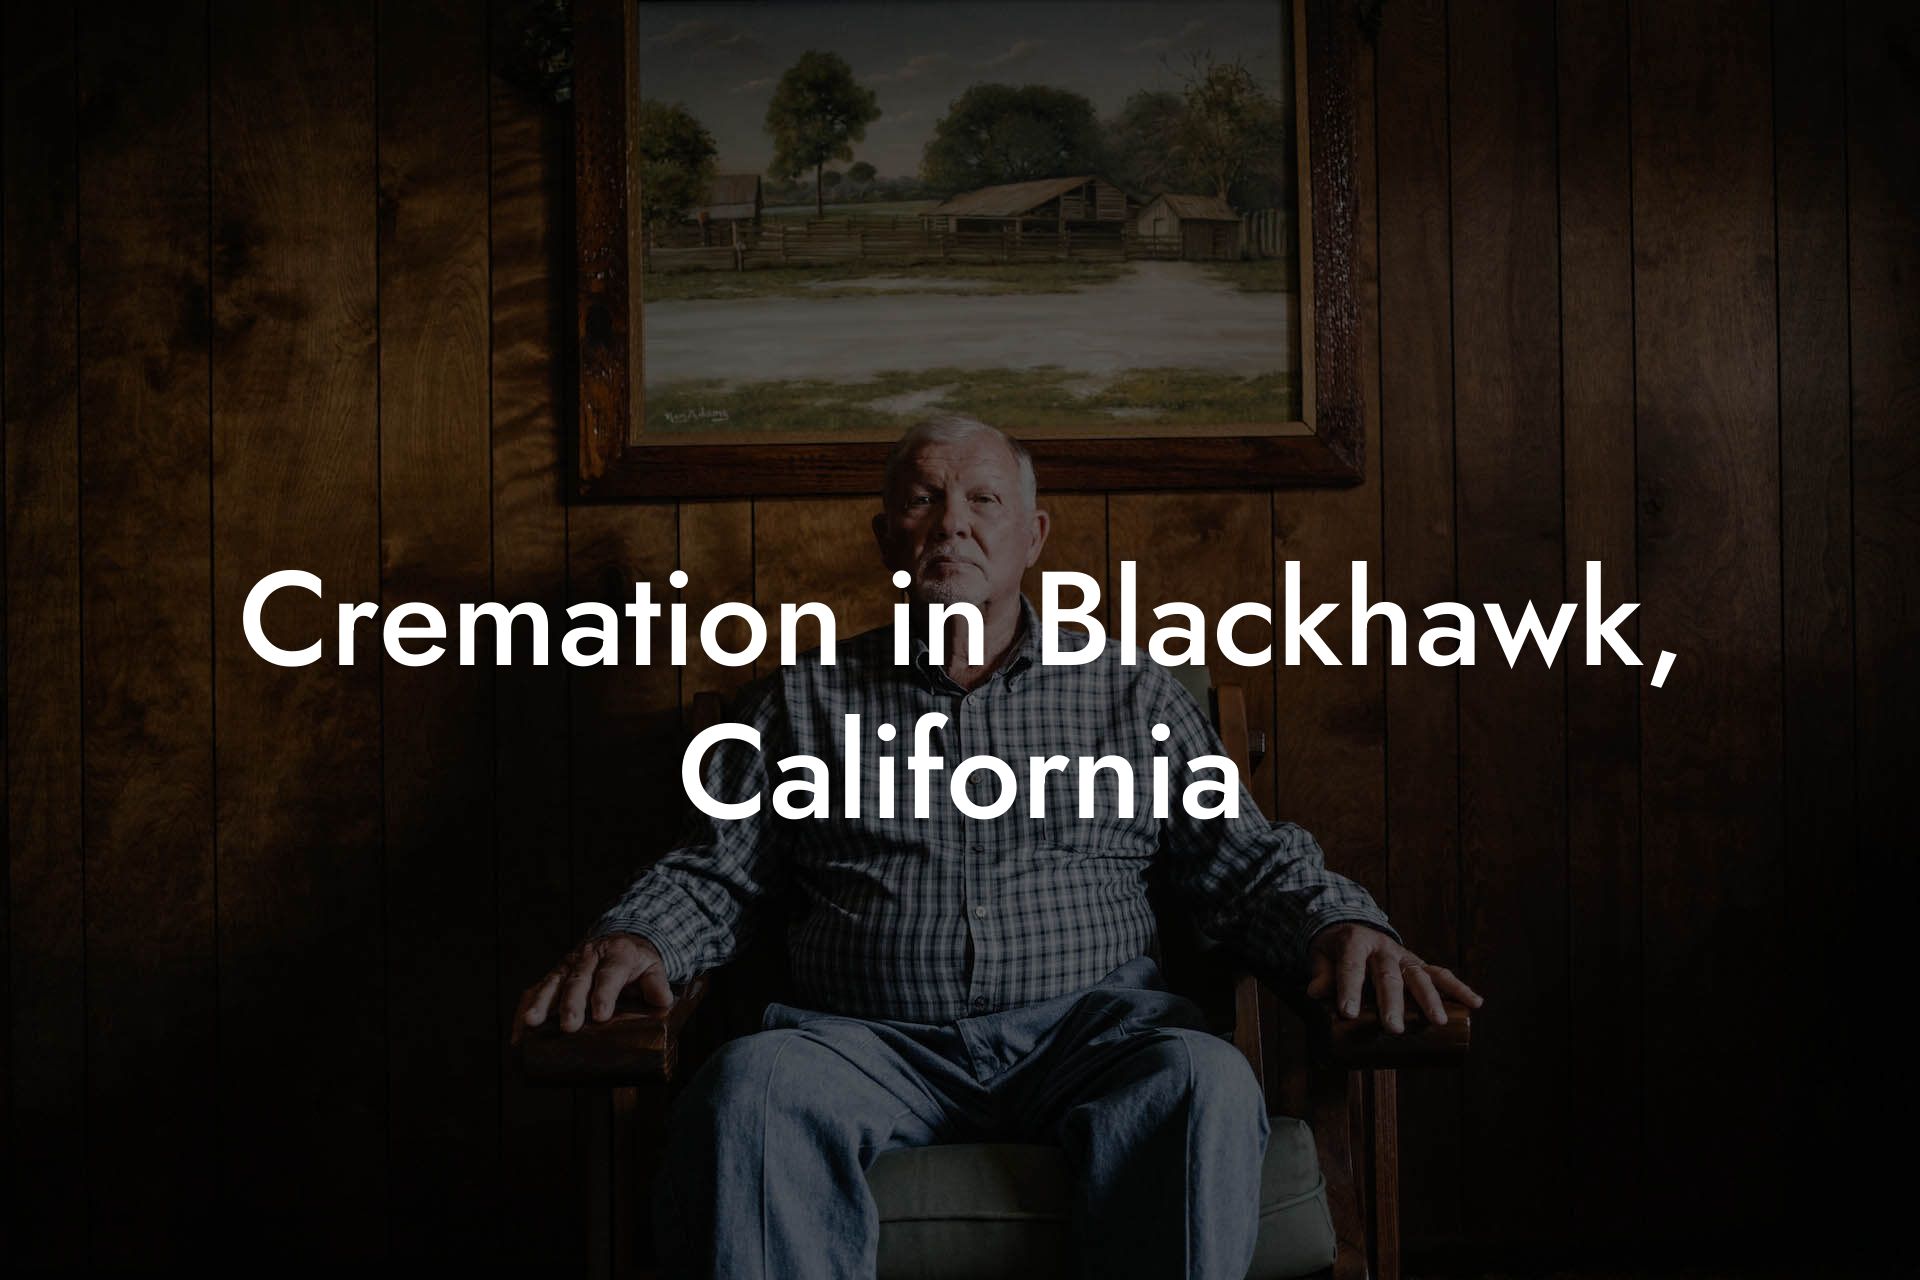 Cremation in Blackhawk, California